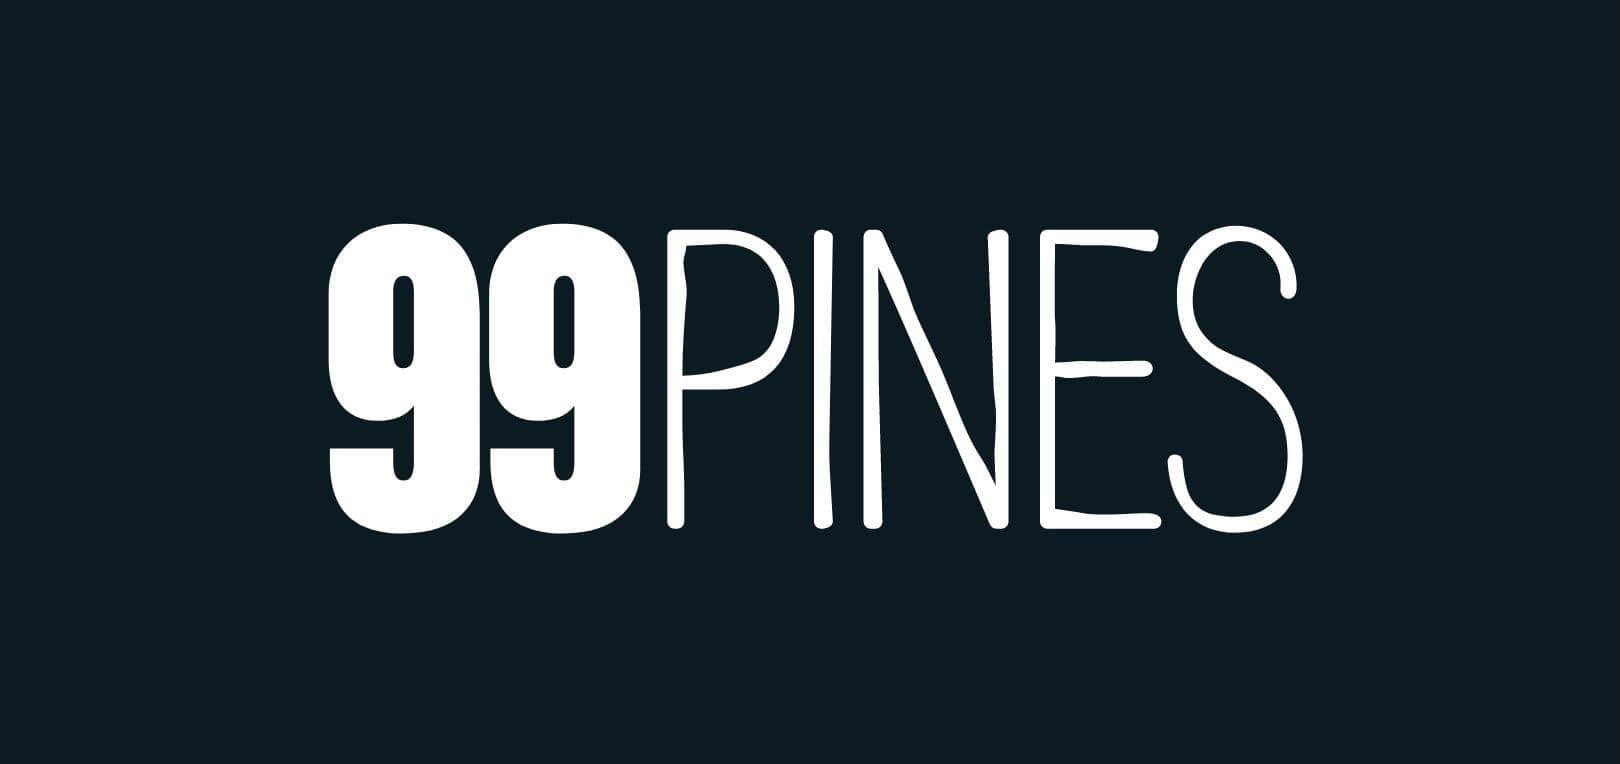 99pines' design case study logo